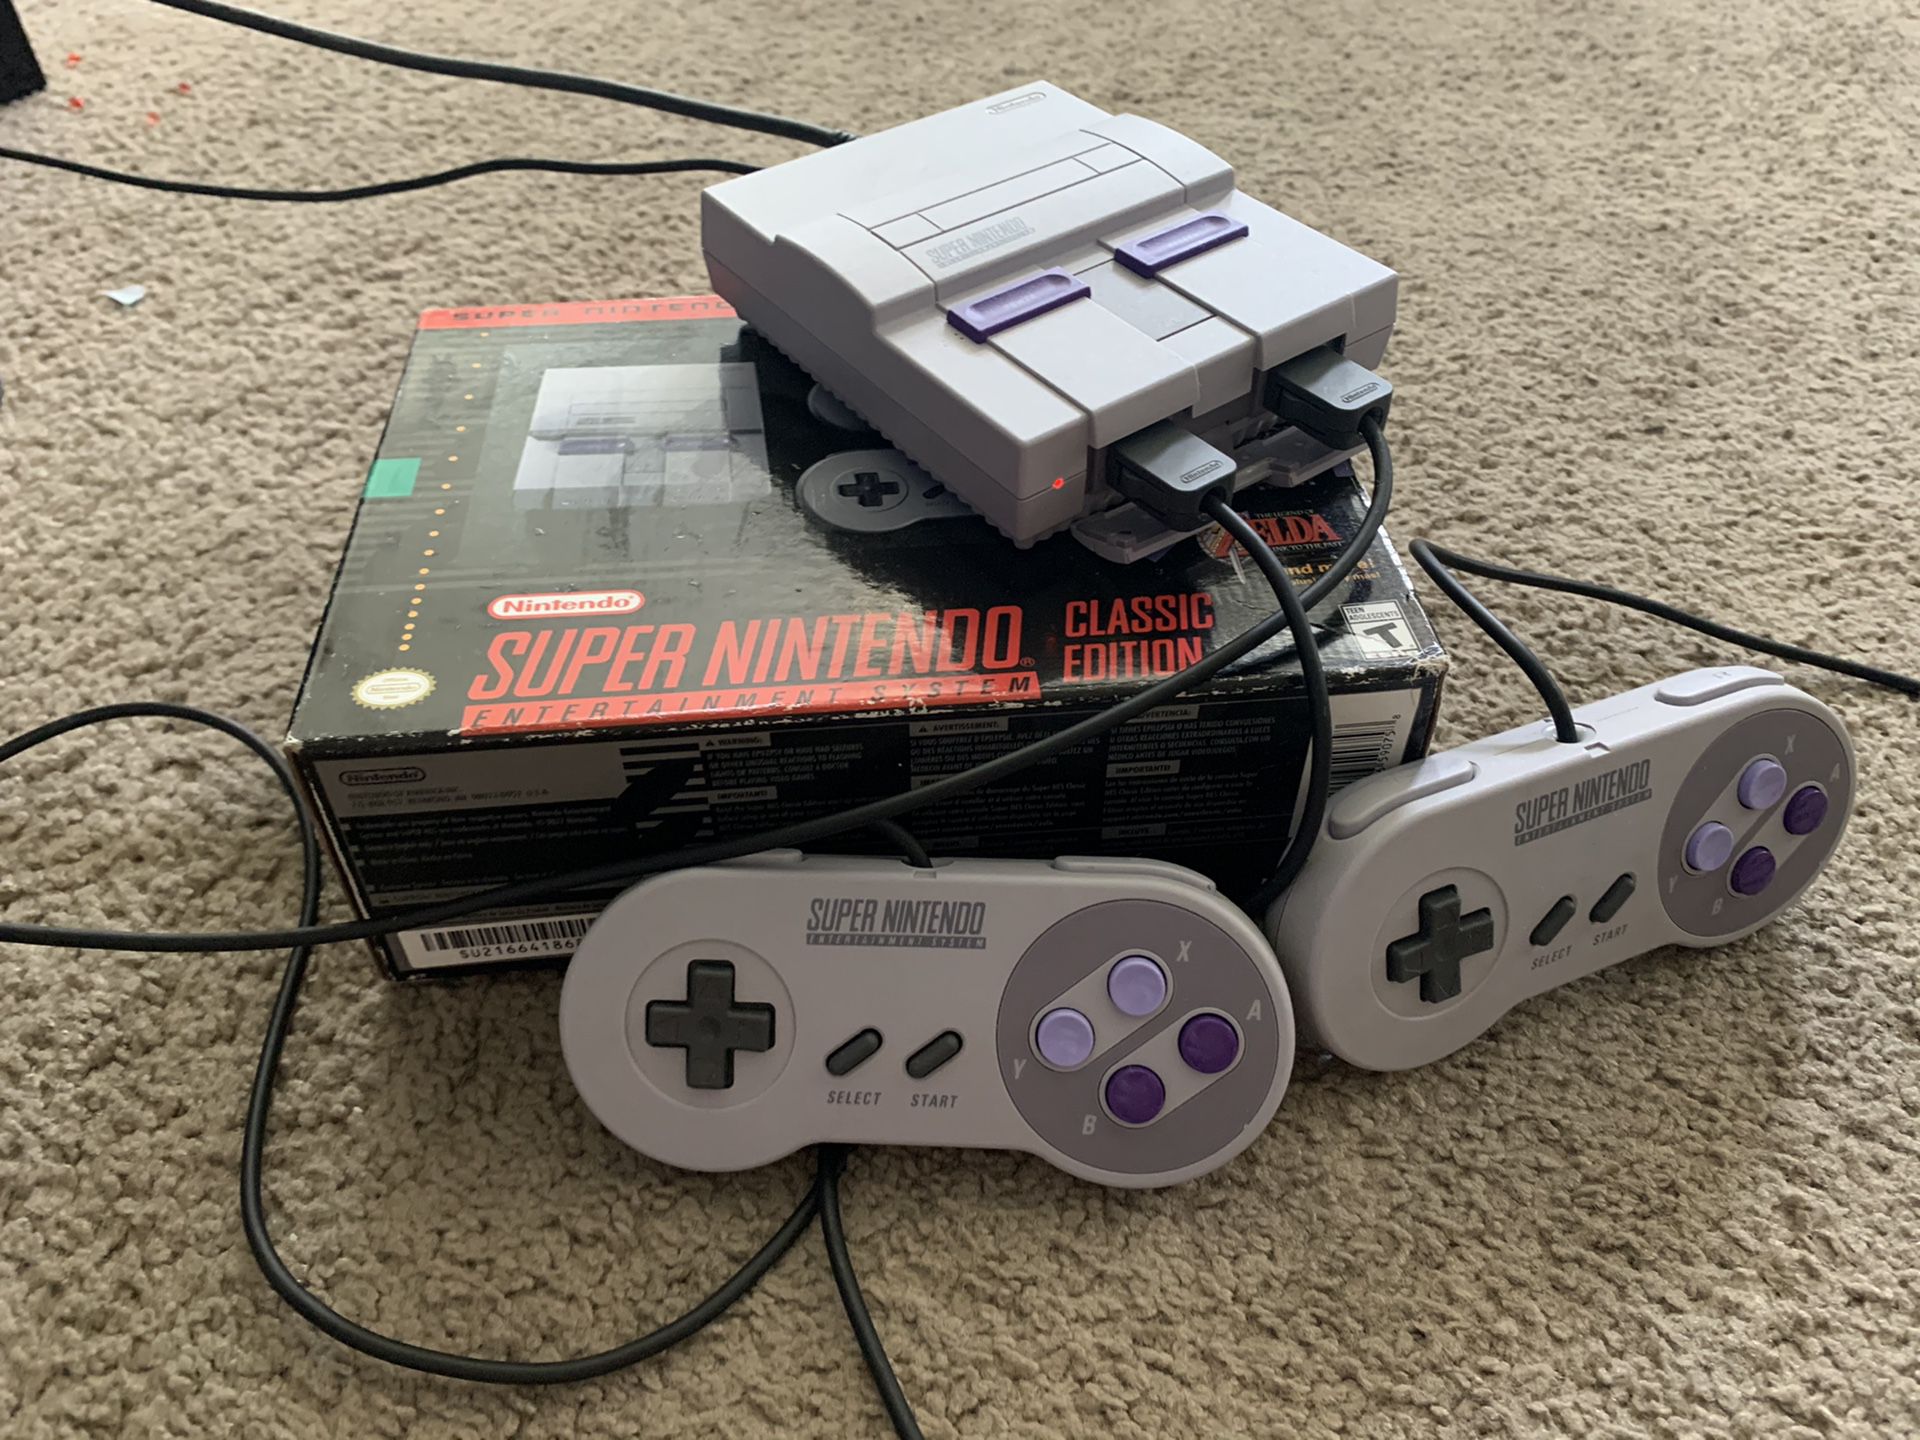 Super Nintendo classic edition